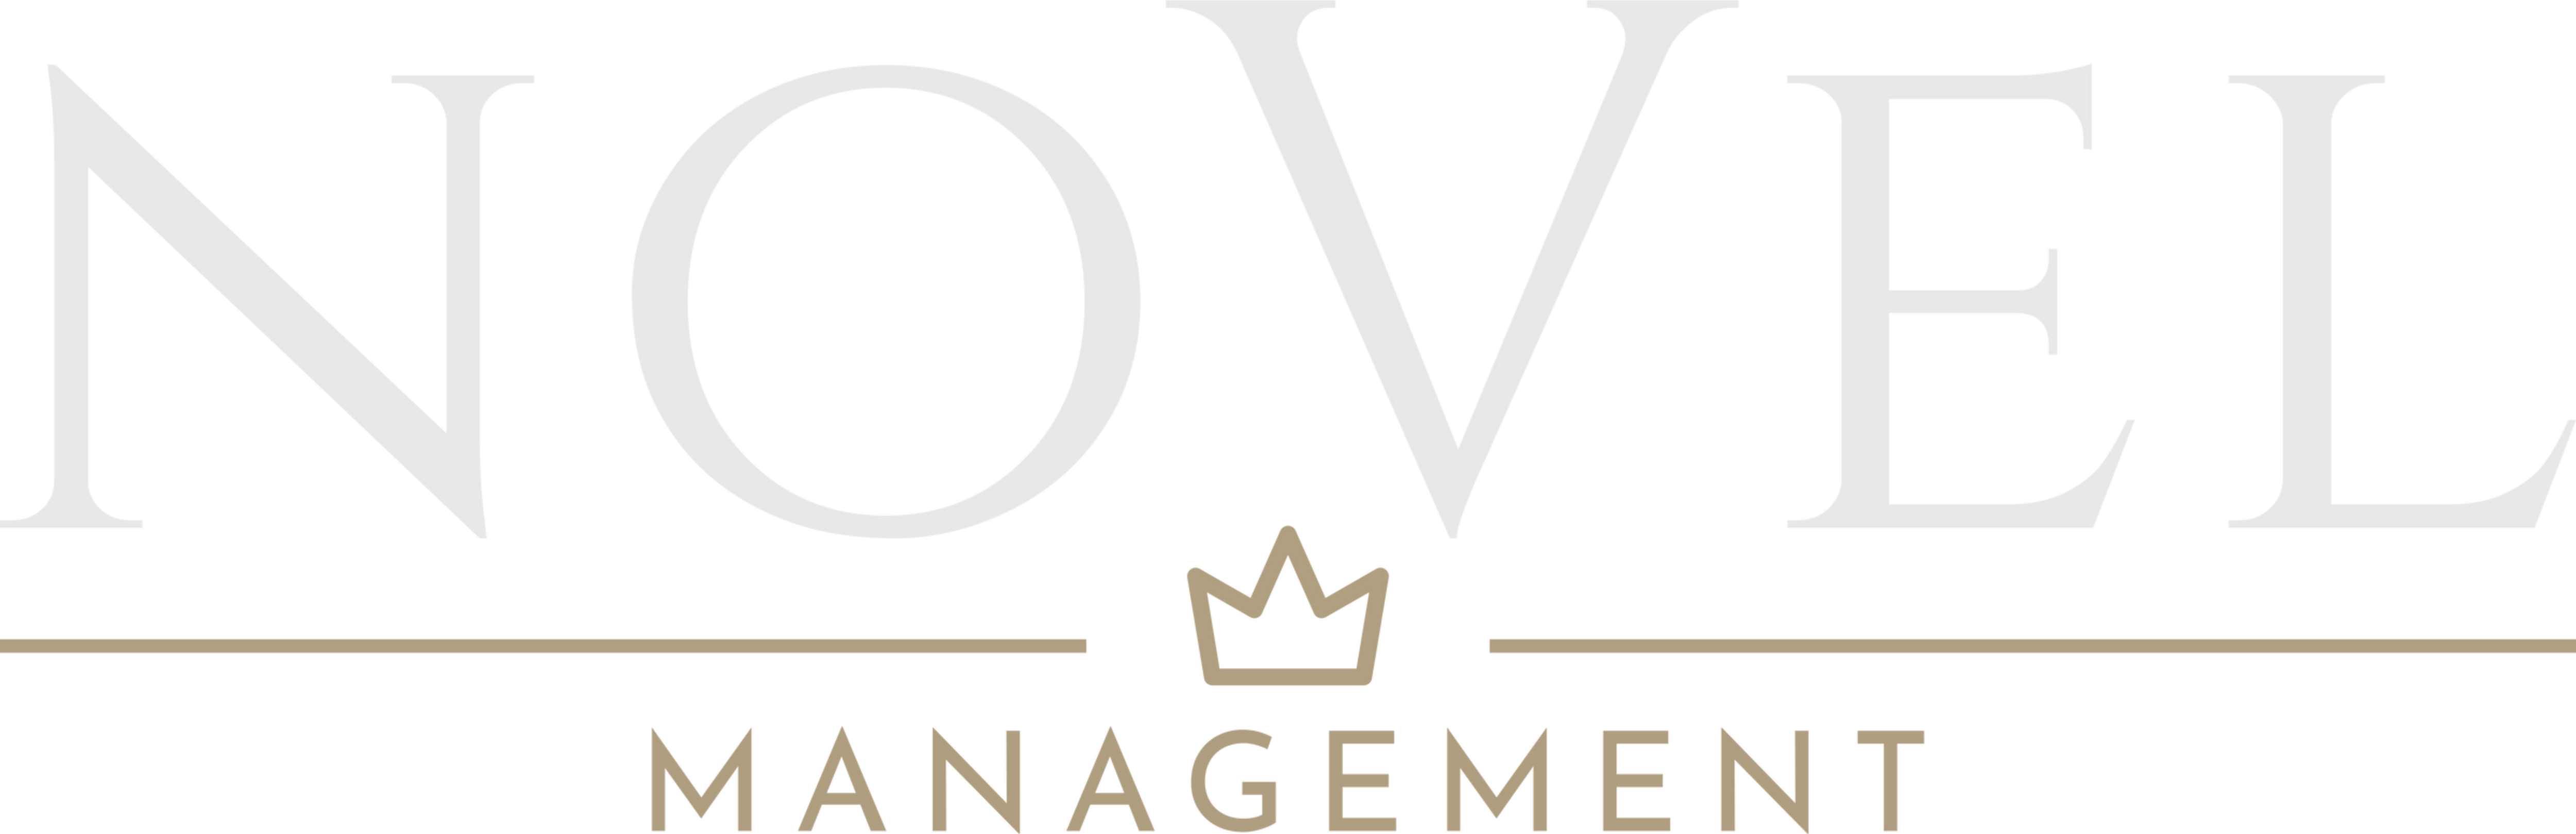 Novel Management Pty Ltd logo